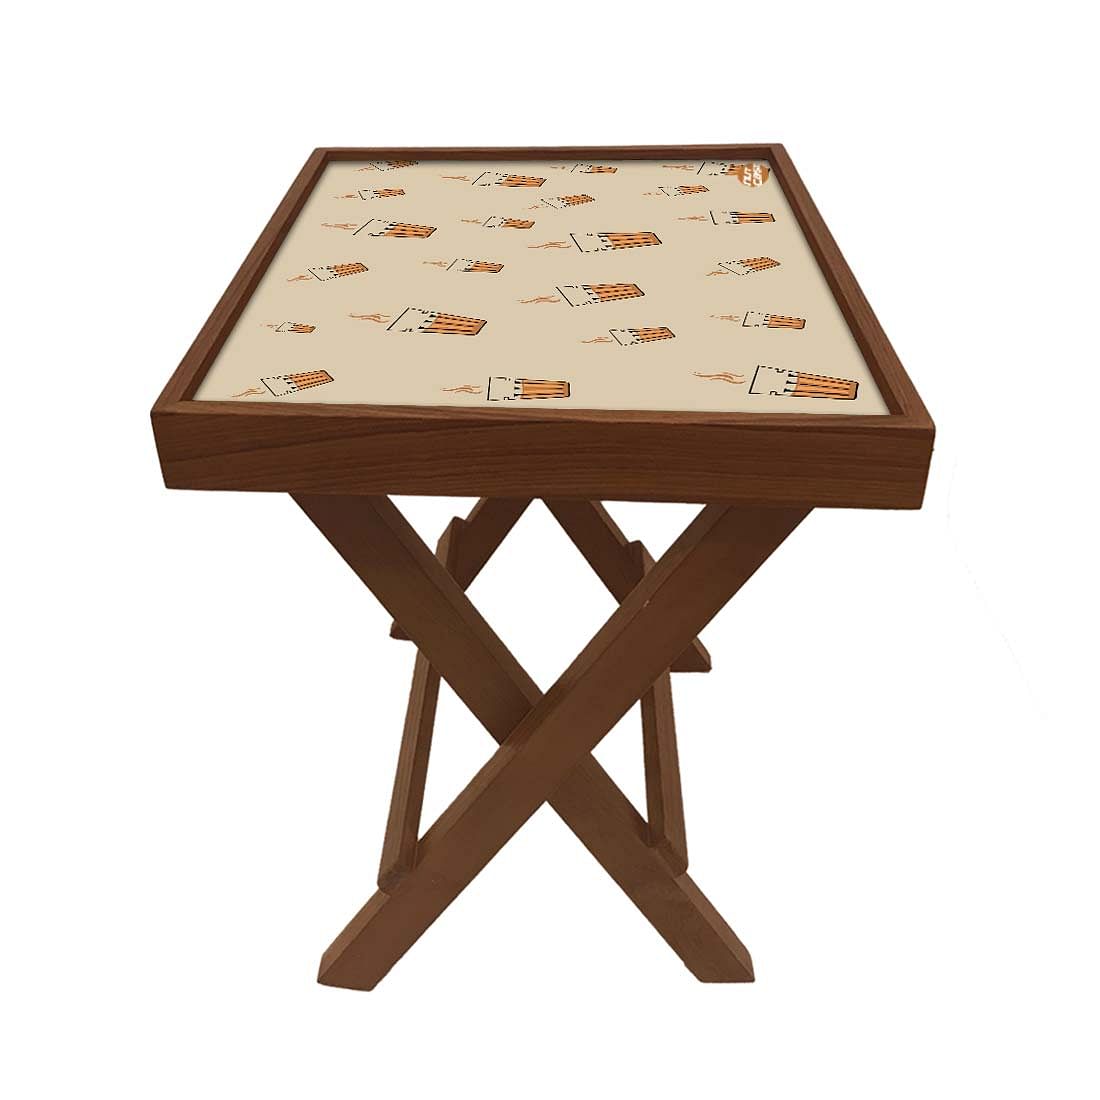 Folding Side Table - Teak Wood - Cutting Chai Nutcase